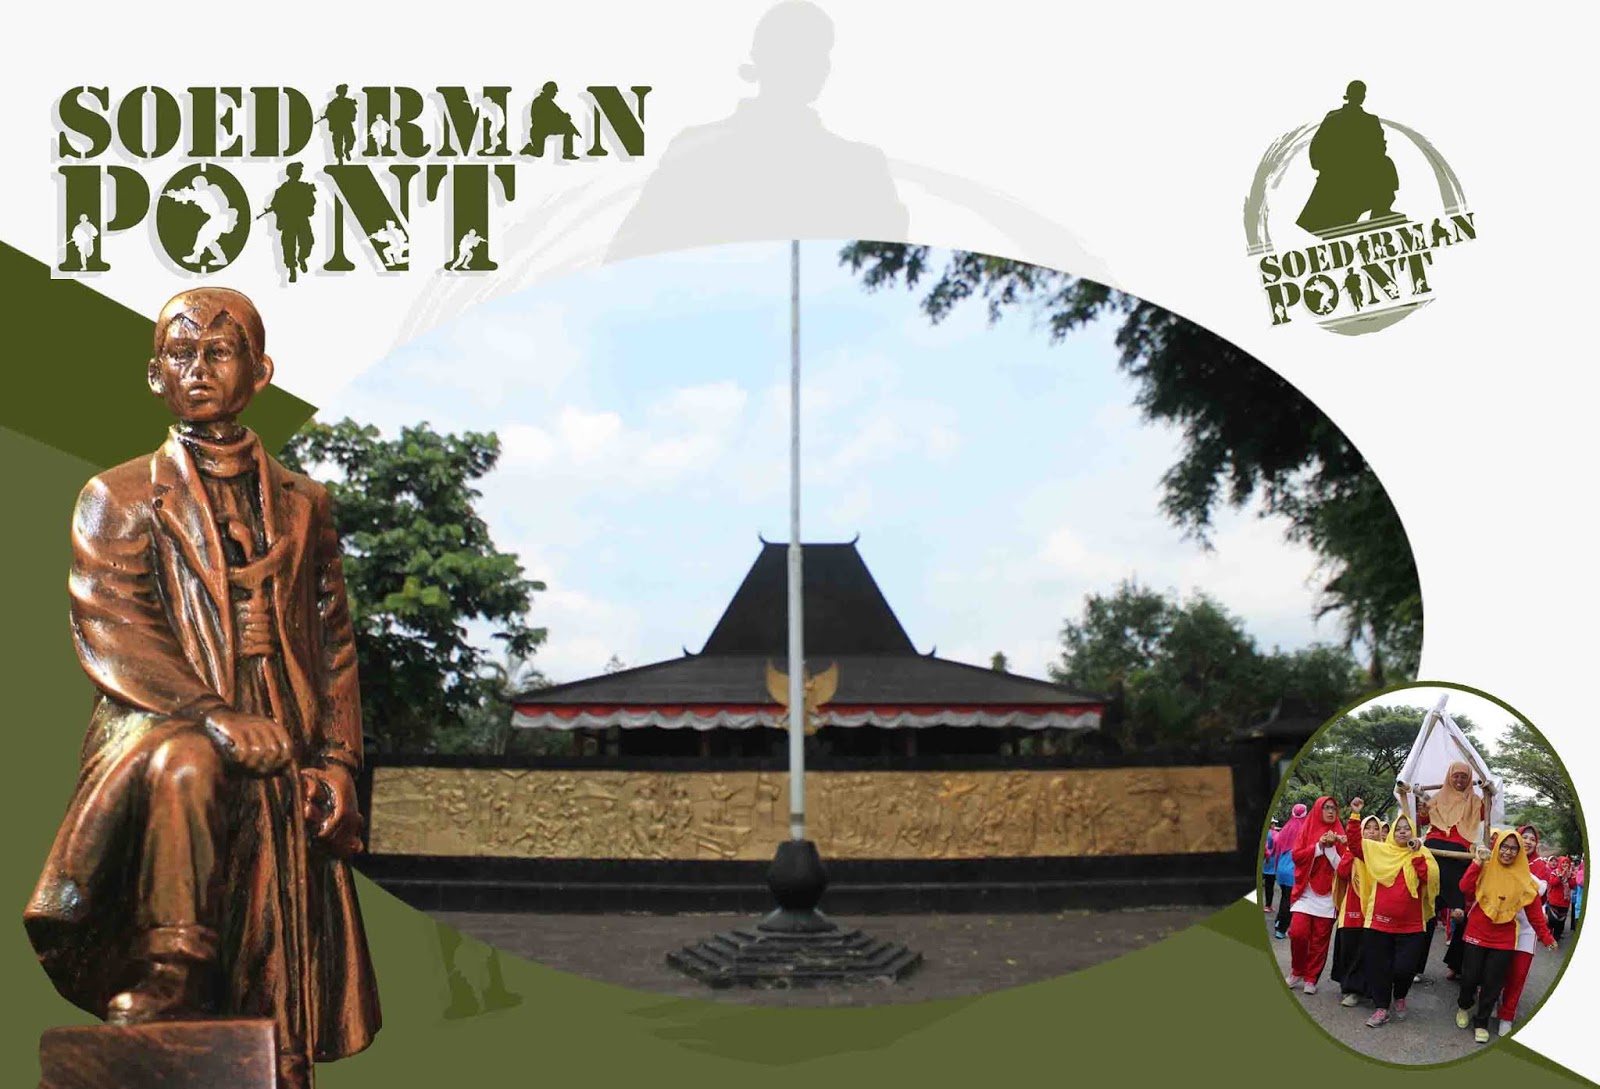 Monumen Jenderal Soedirman